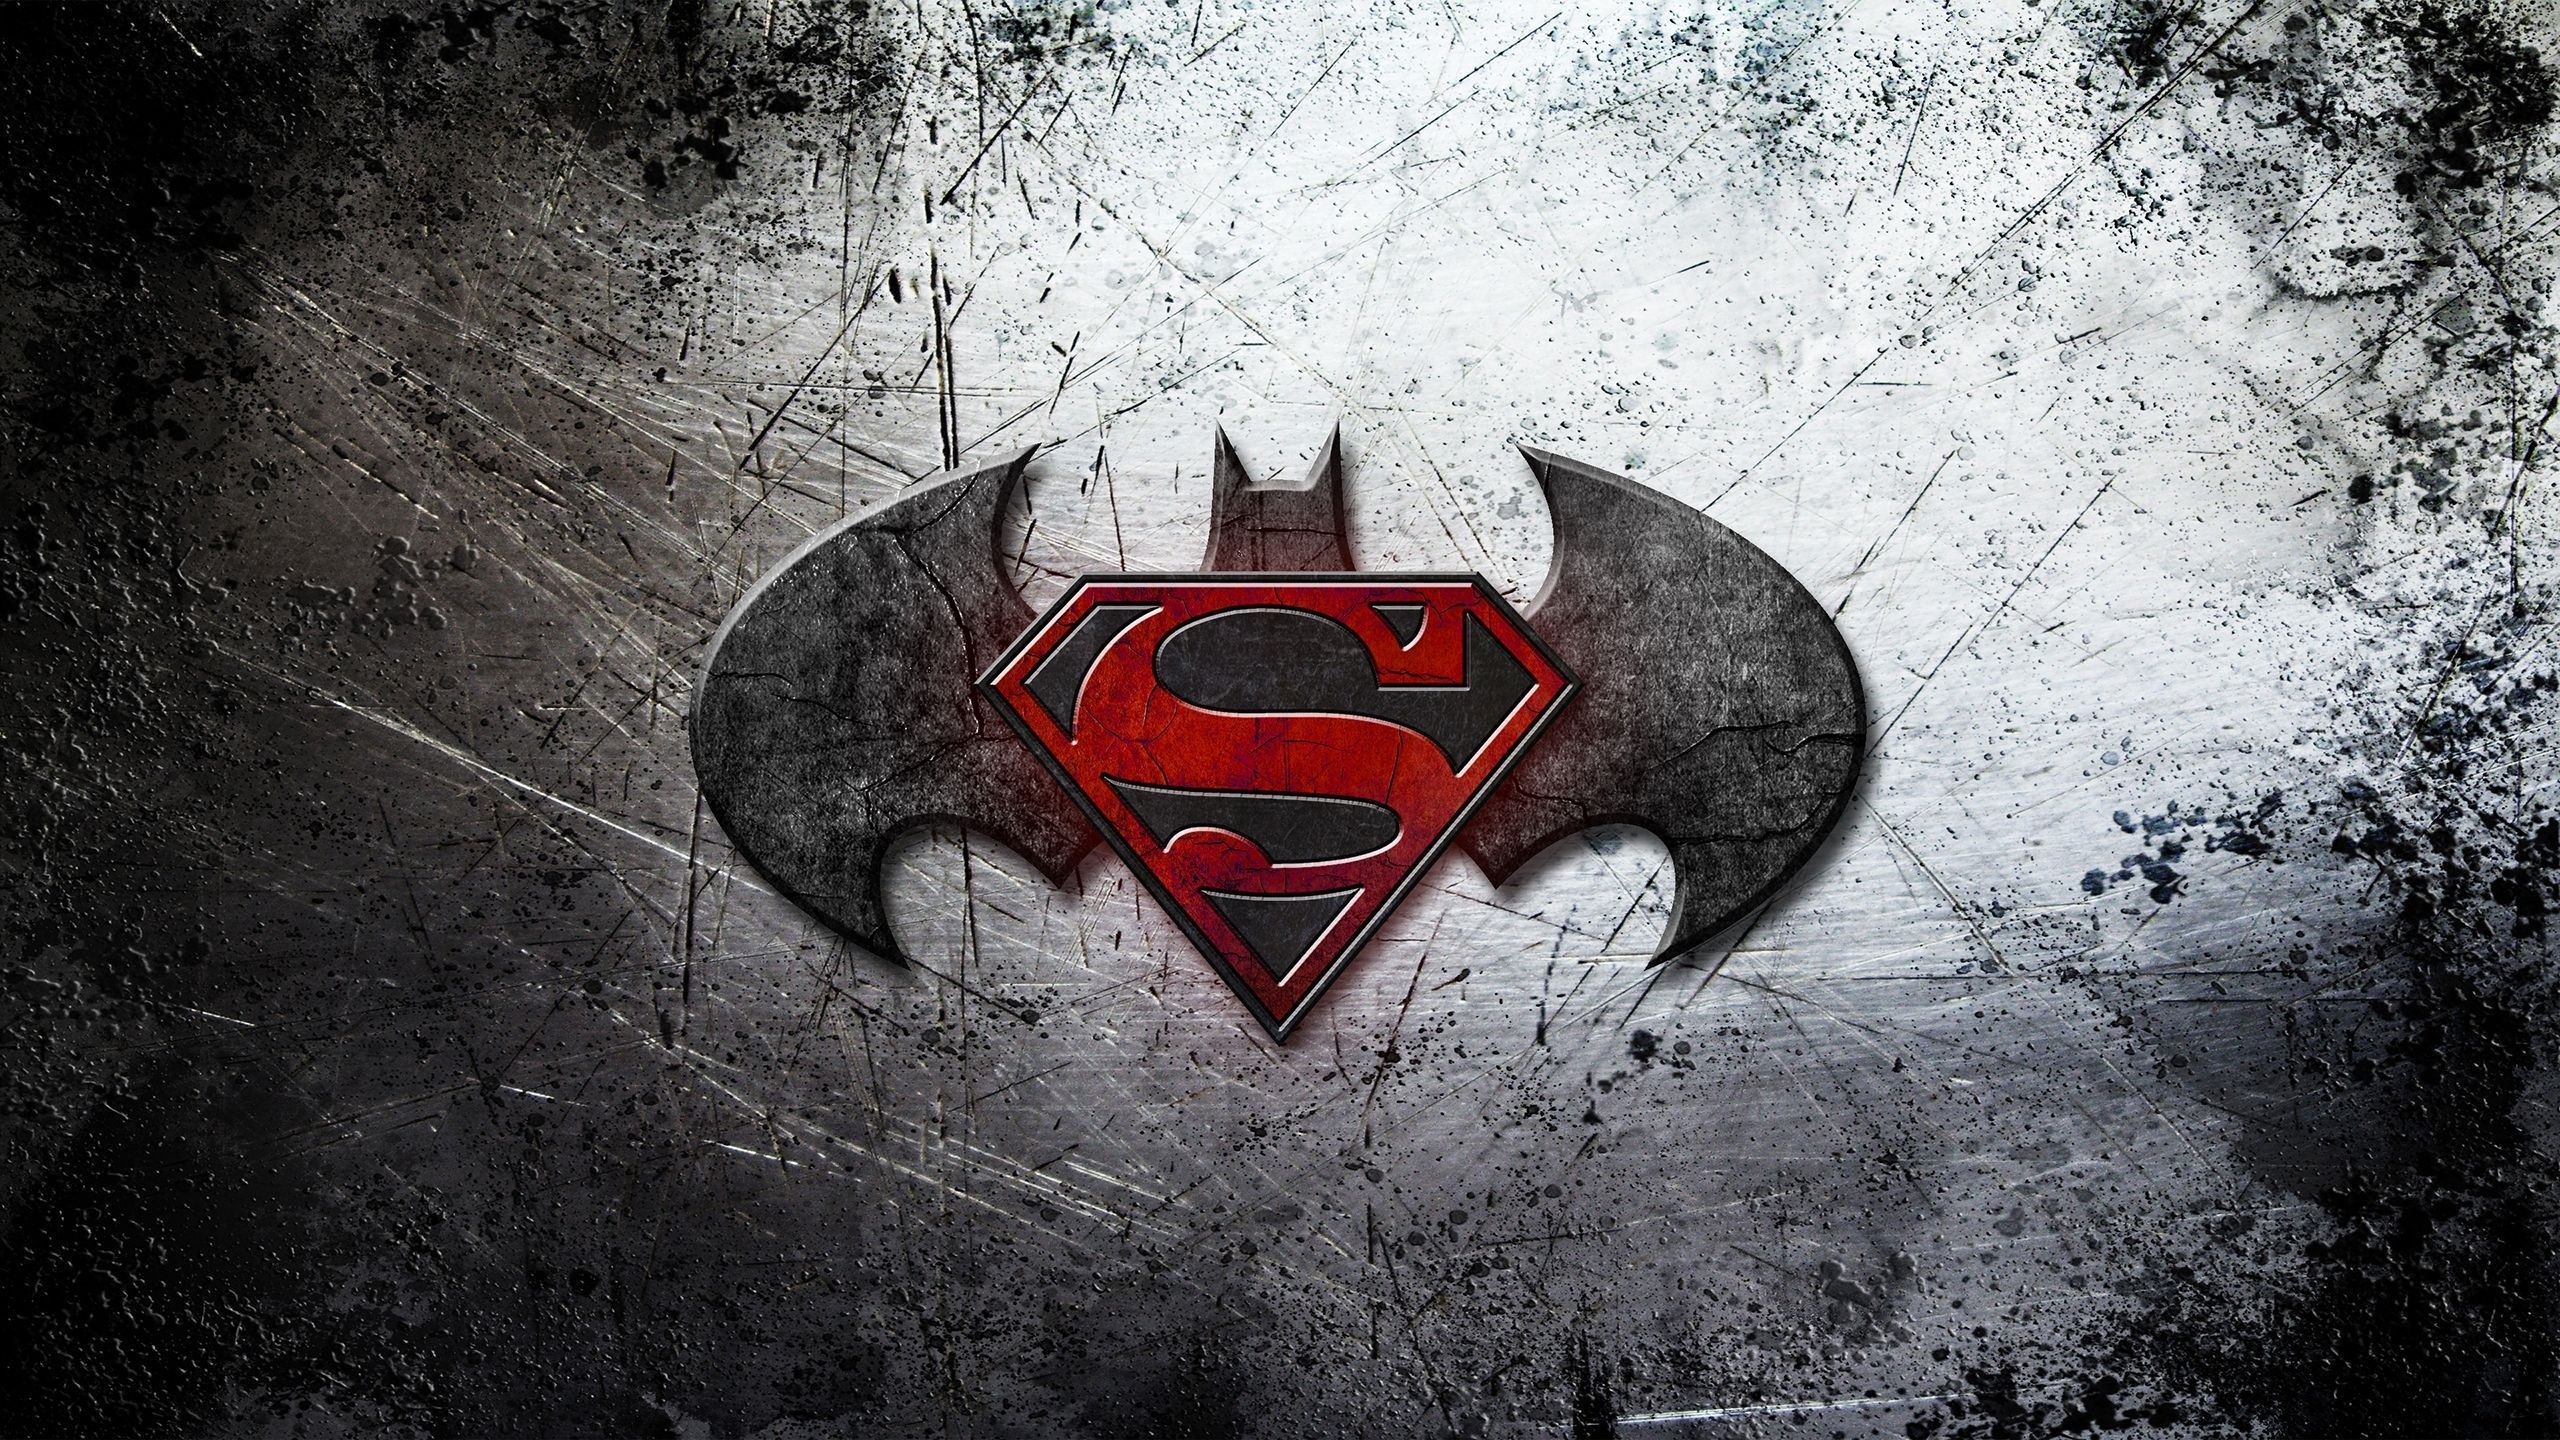 Batman vs Superman Logo Wallpaper - HD Wallpapers Backgrounds of ...